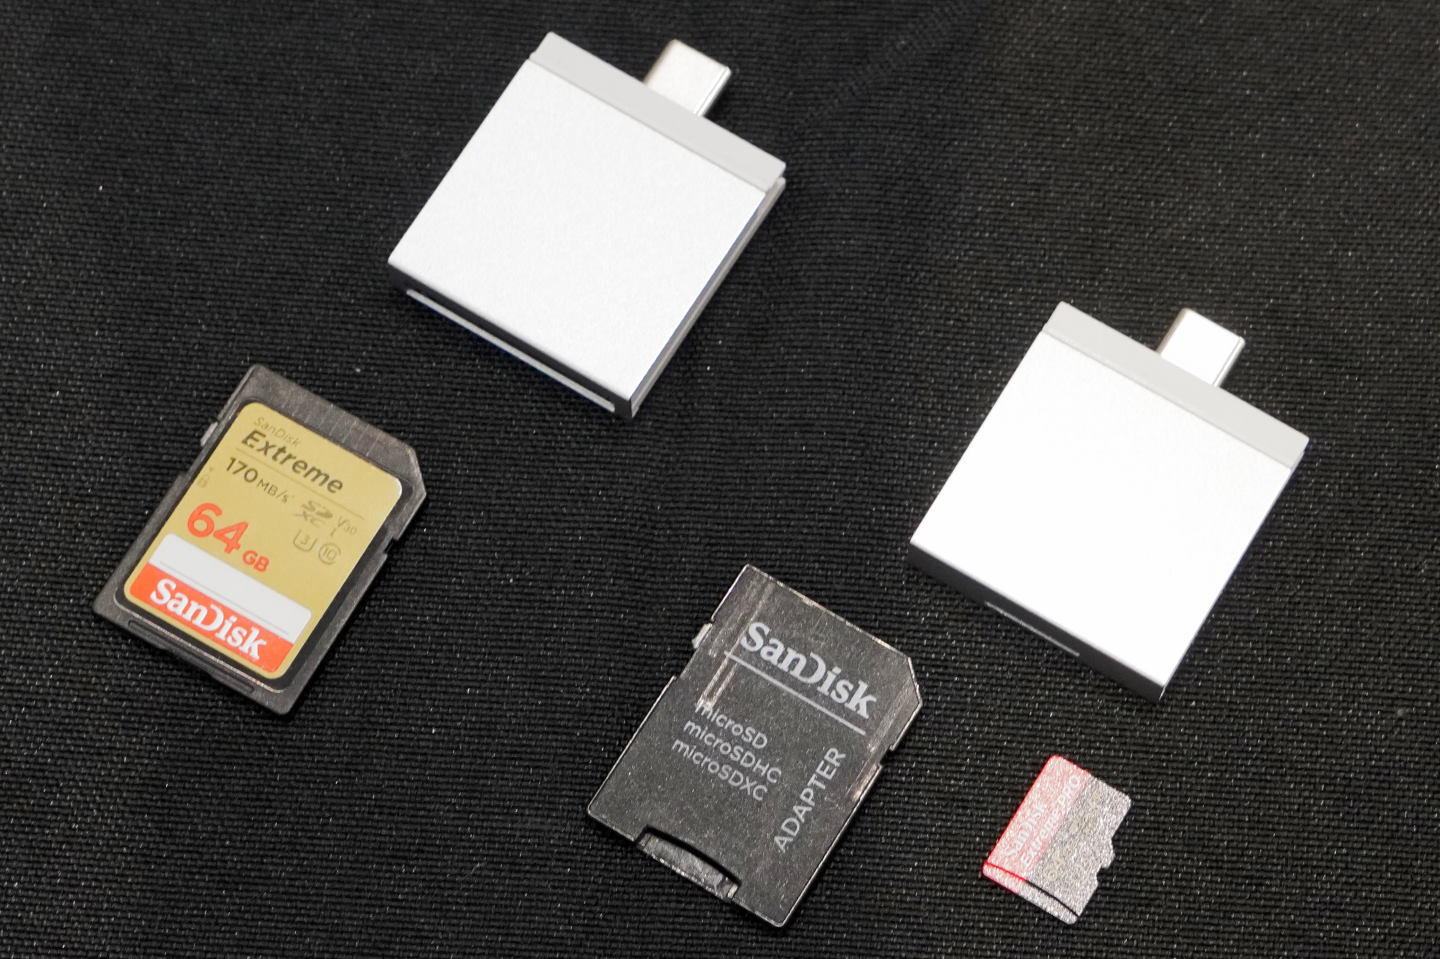 Framework也推出標準尺寸SD讀卡機模組。圖片右側為micro SD讀卡機模組。